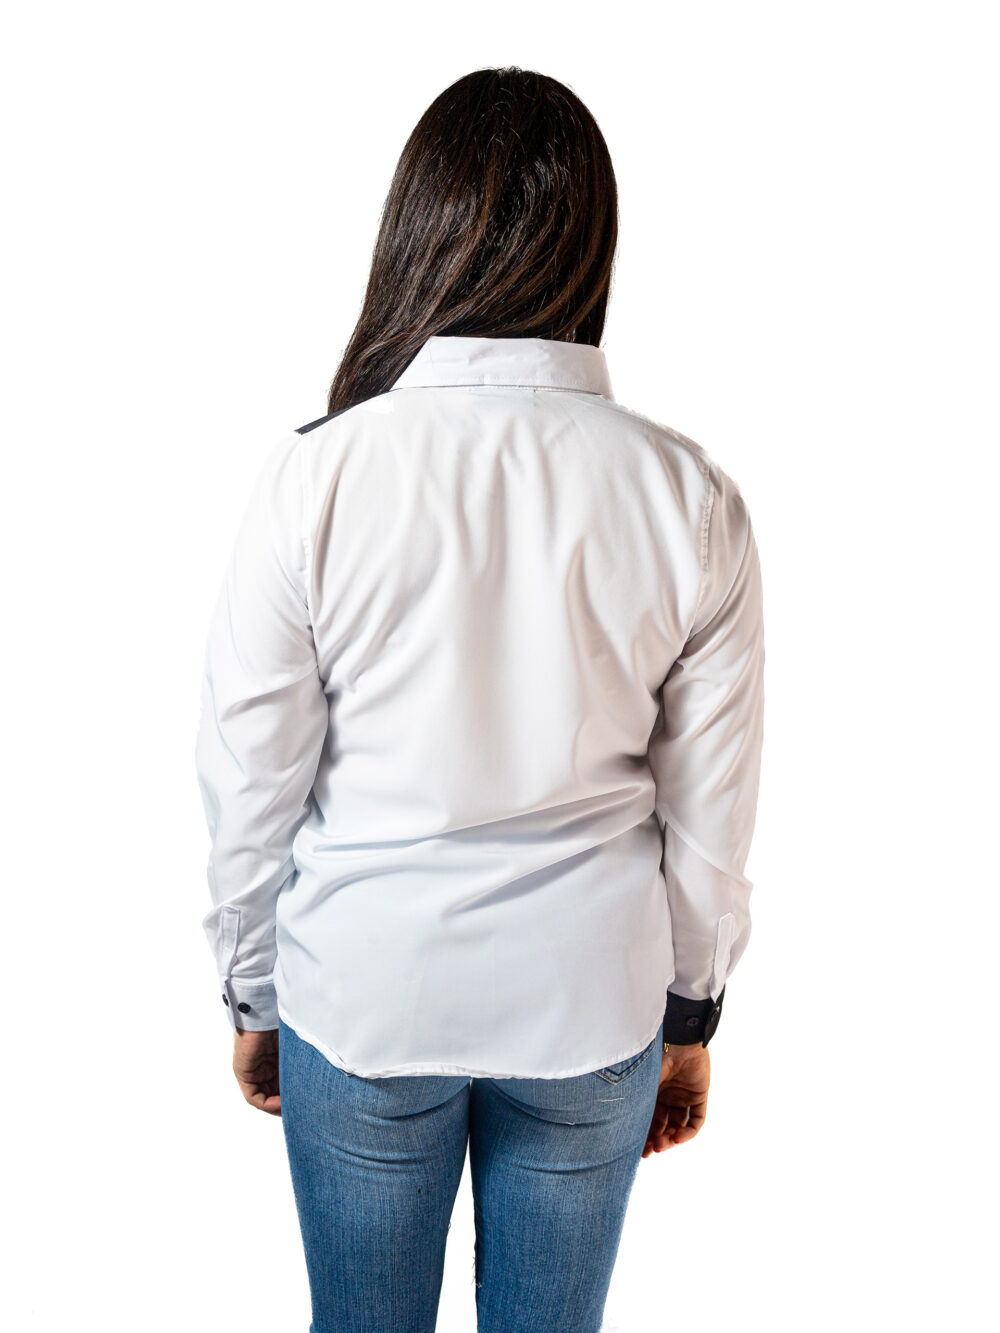 Camisa Blusa Mujer Casual Blanca, Negra Manga Larga 2